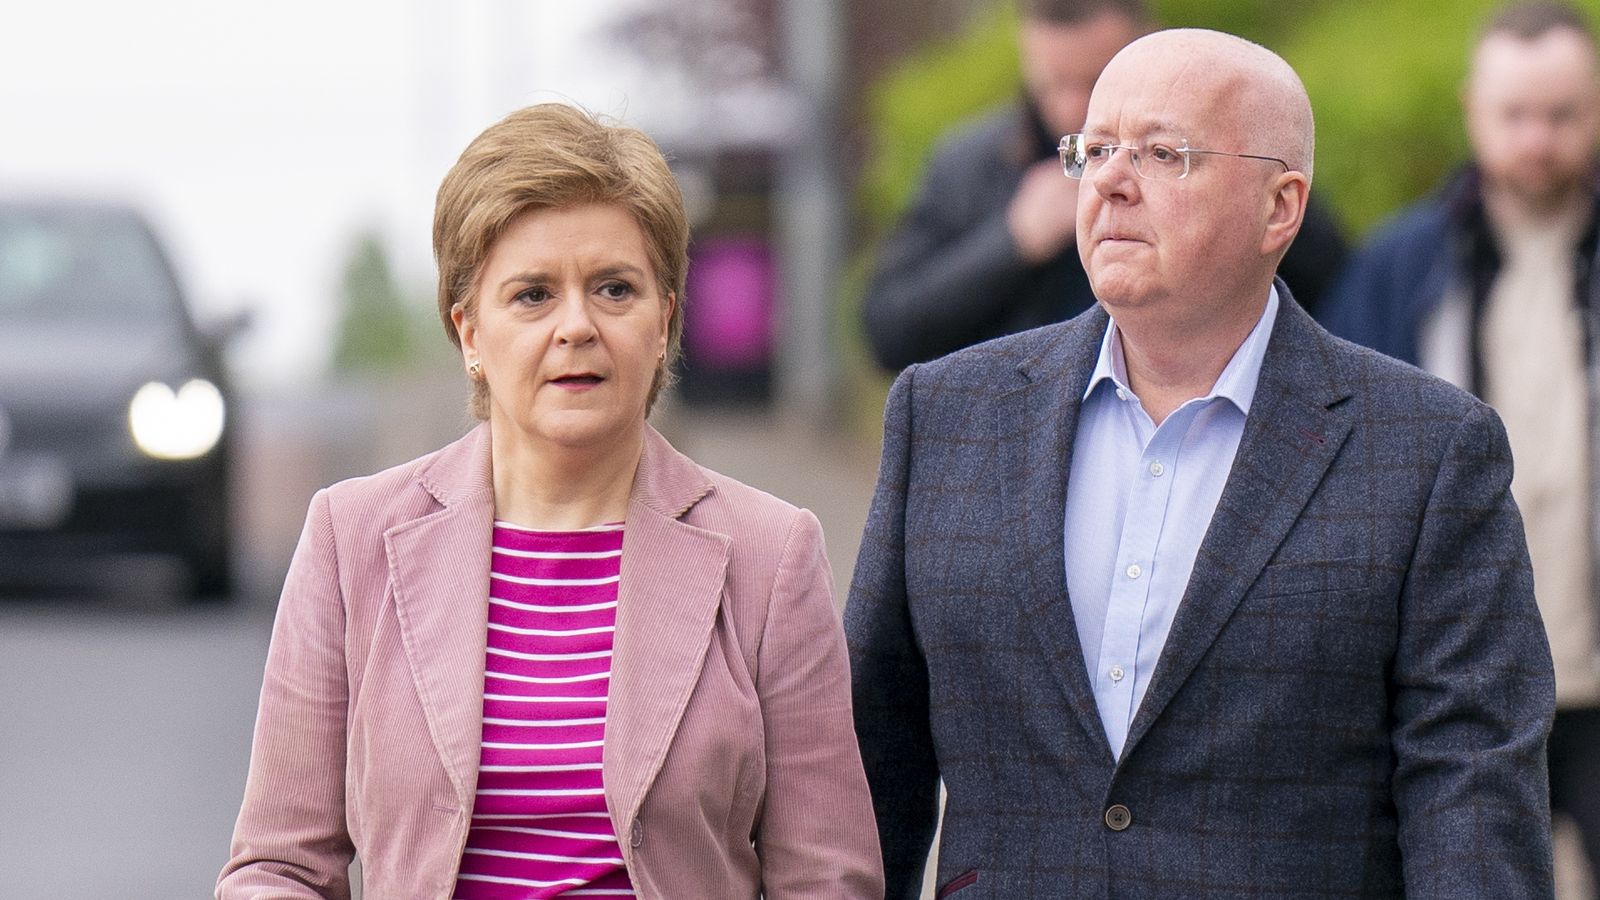 SNP leadership contender Ash Regan says 'conflict of interest' over Nicola Sturgeon's husband in contest